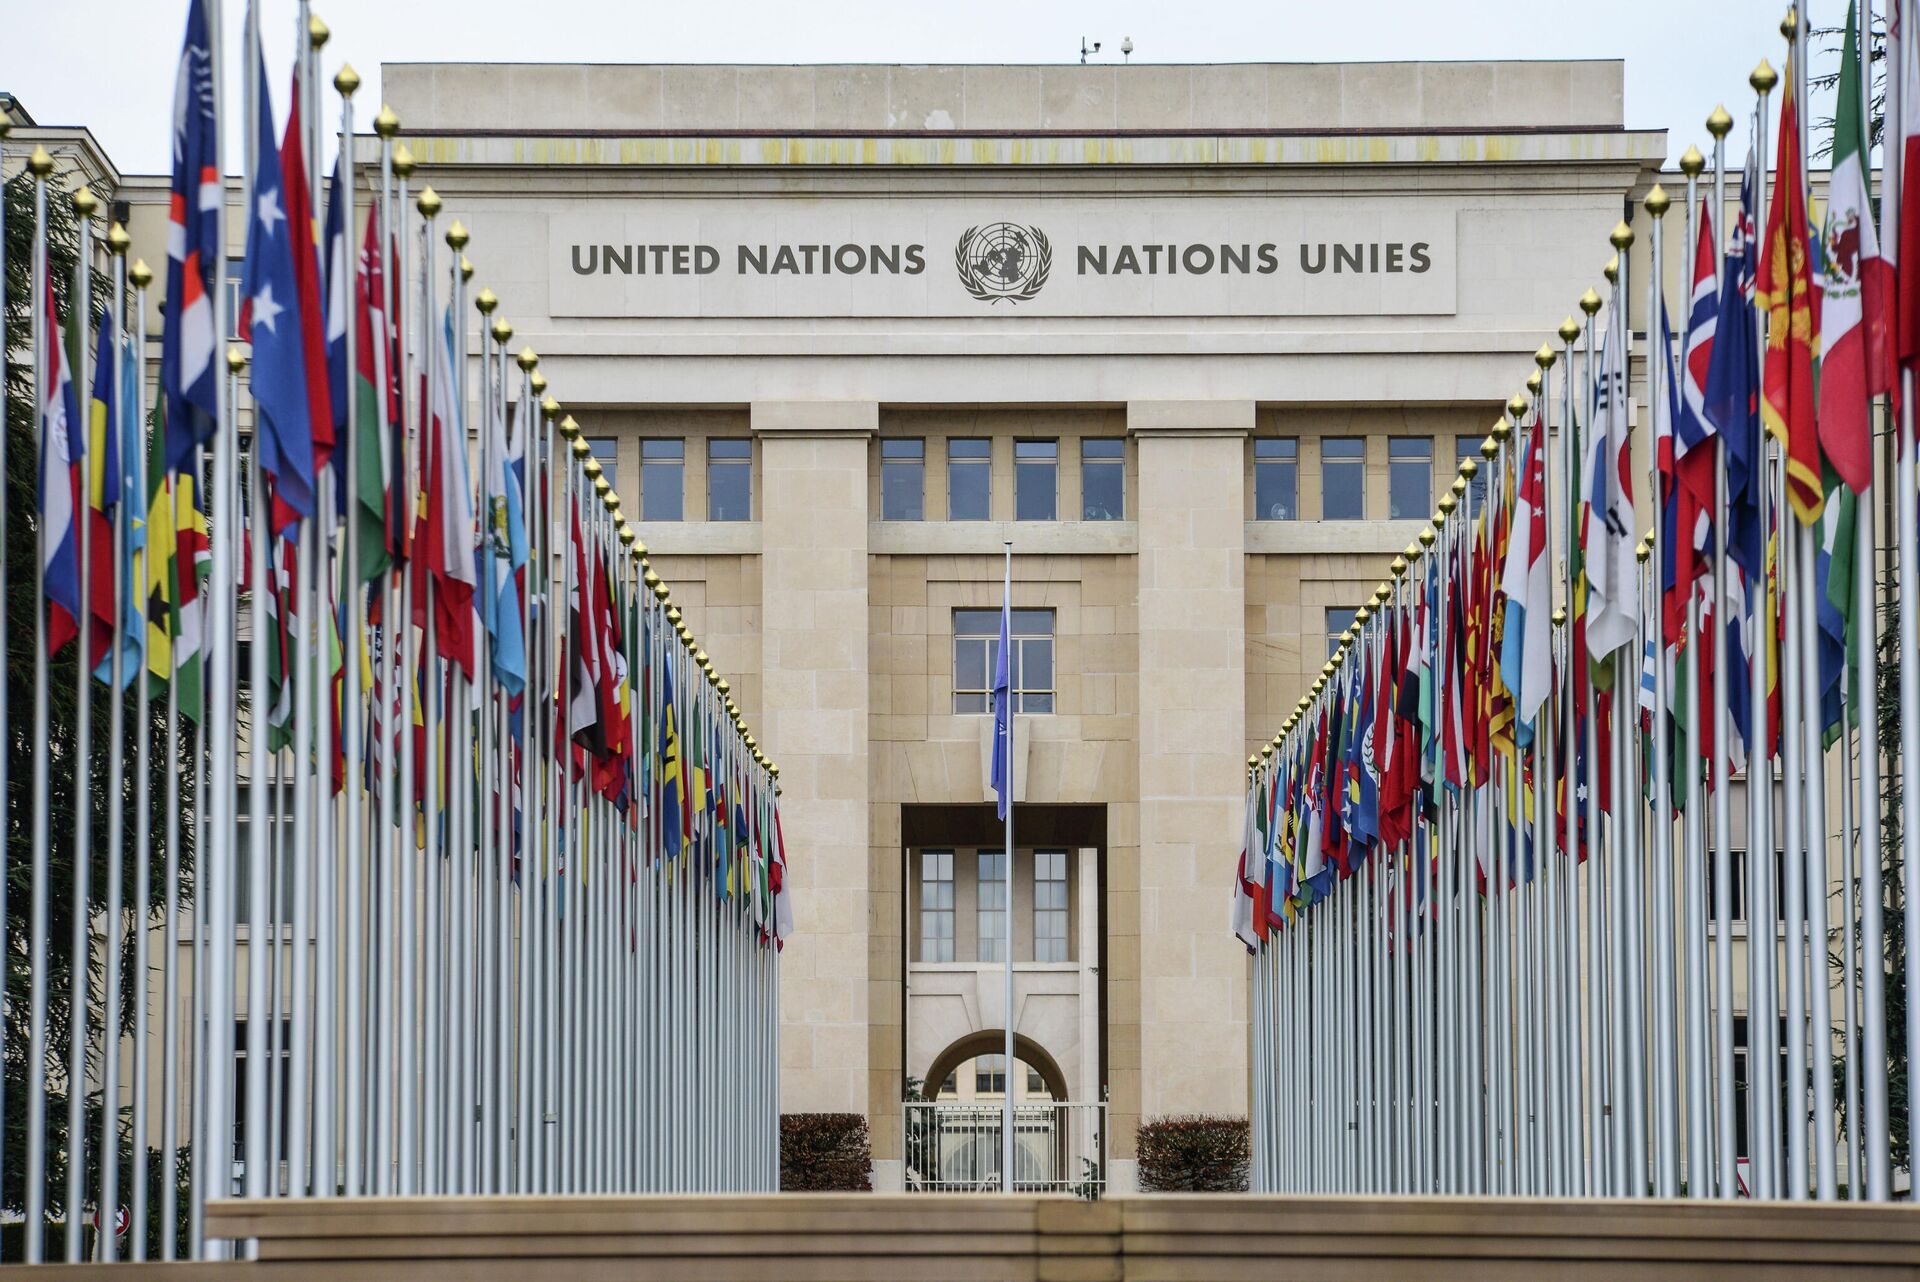 Аллея флагов возле здания ООН в Женеве - РИА Новости, 1920, 06.10.2021